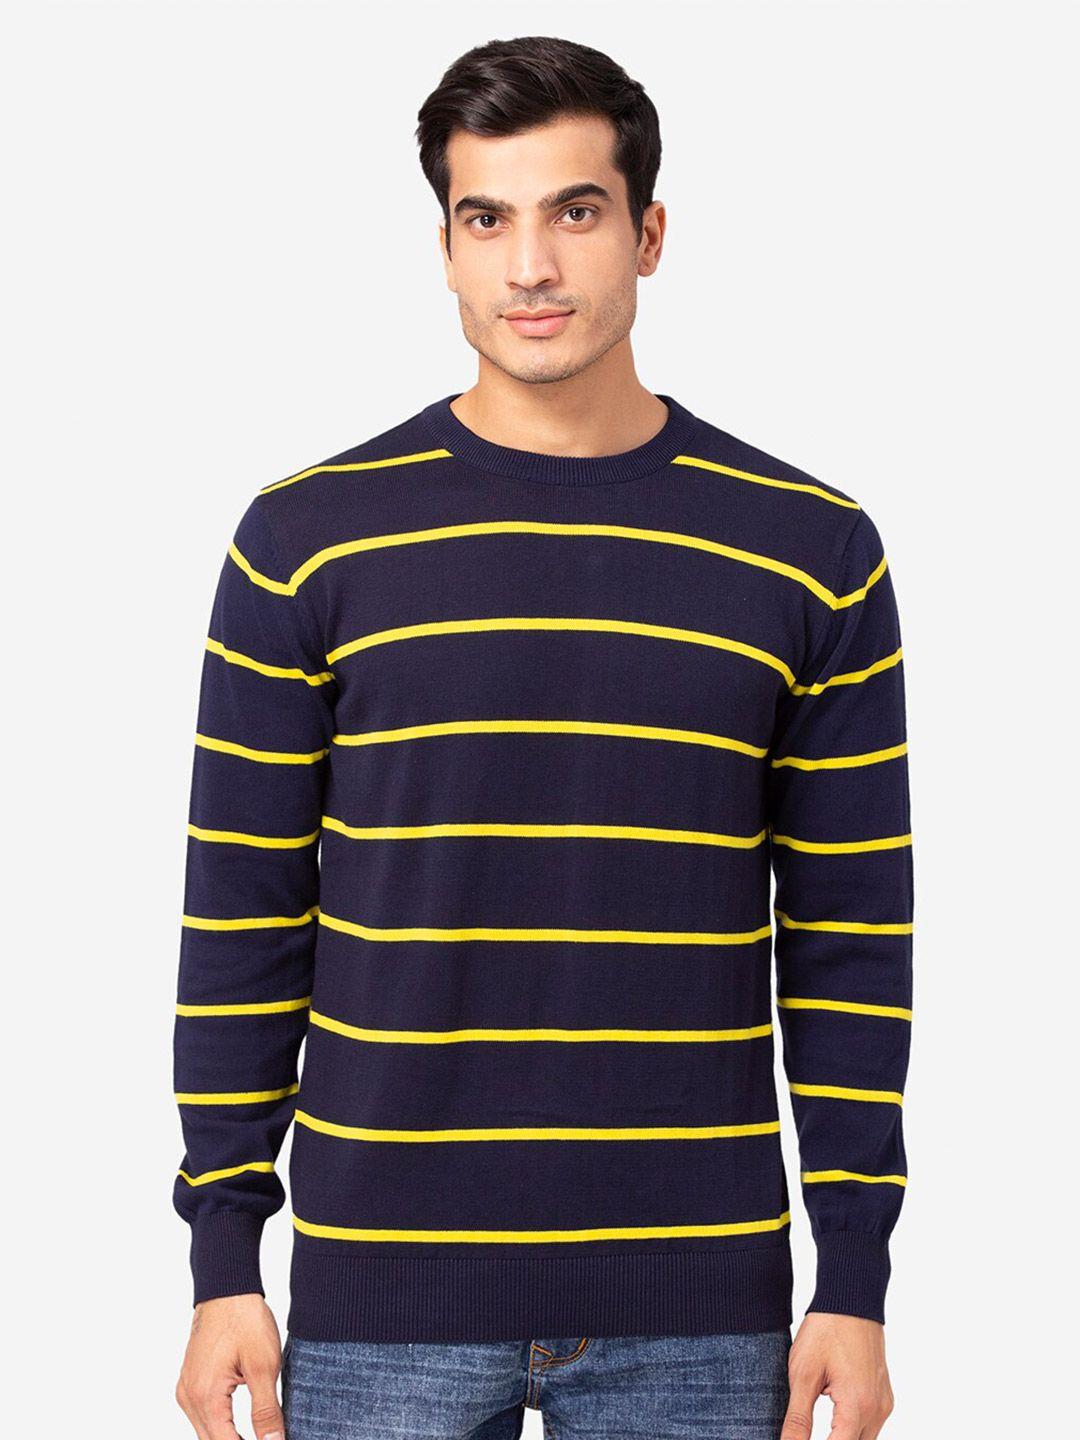 allen-cooper-men-navy-blue-&-yellow-striped-pullover-sweater